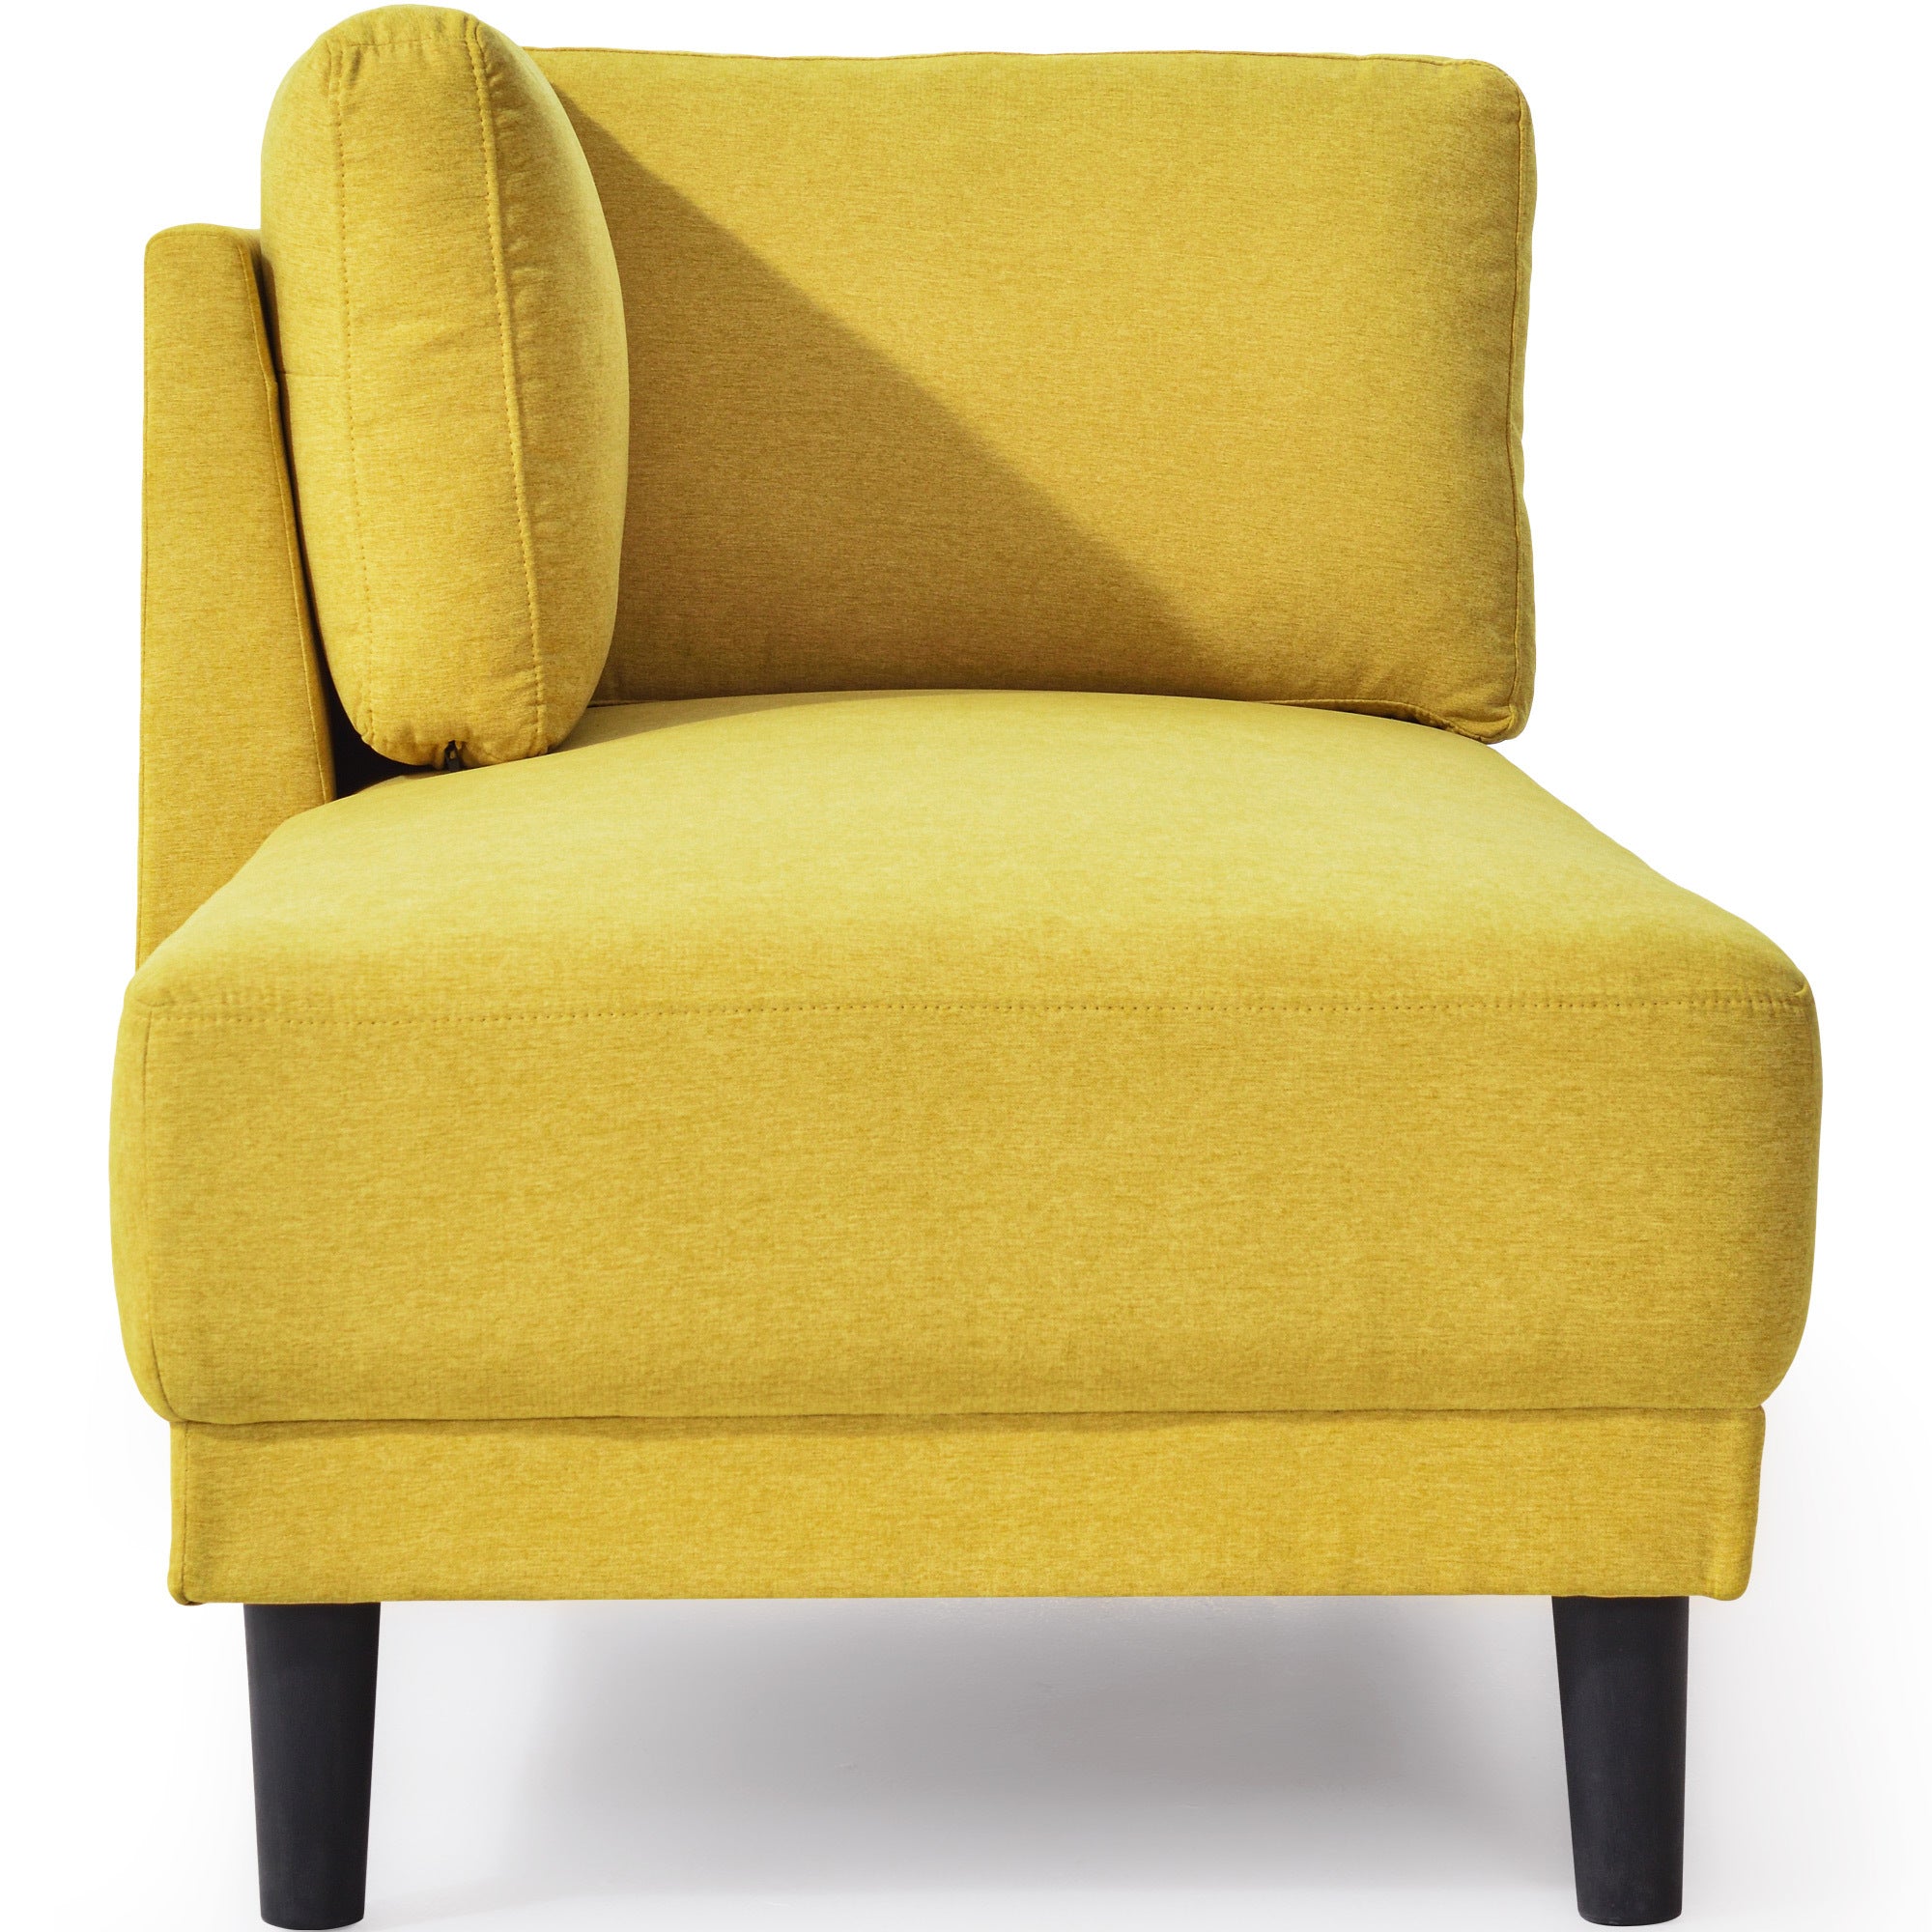 New Video 65" Mid Century Modern Fabric Corner Lounge yellow-fabric-fabric